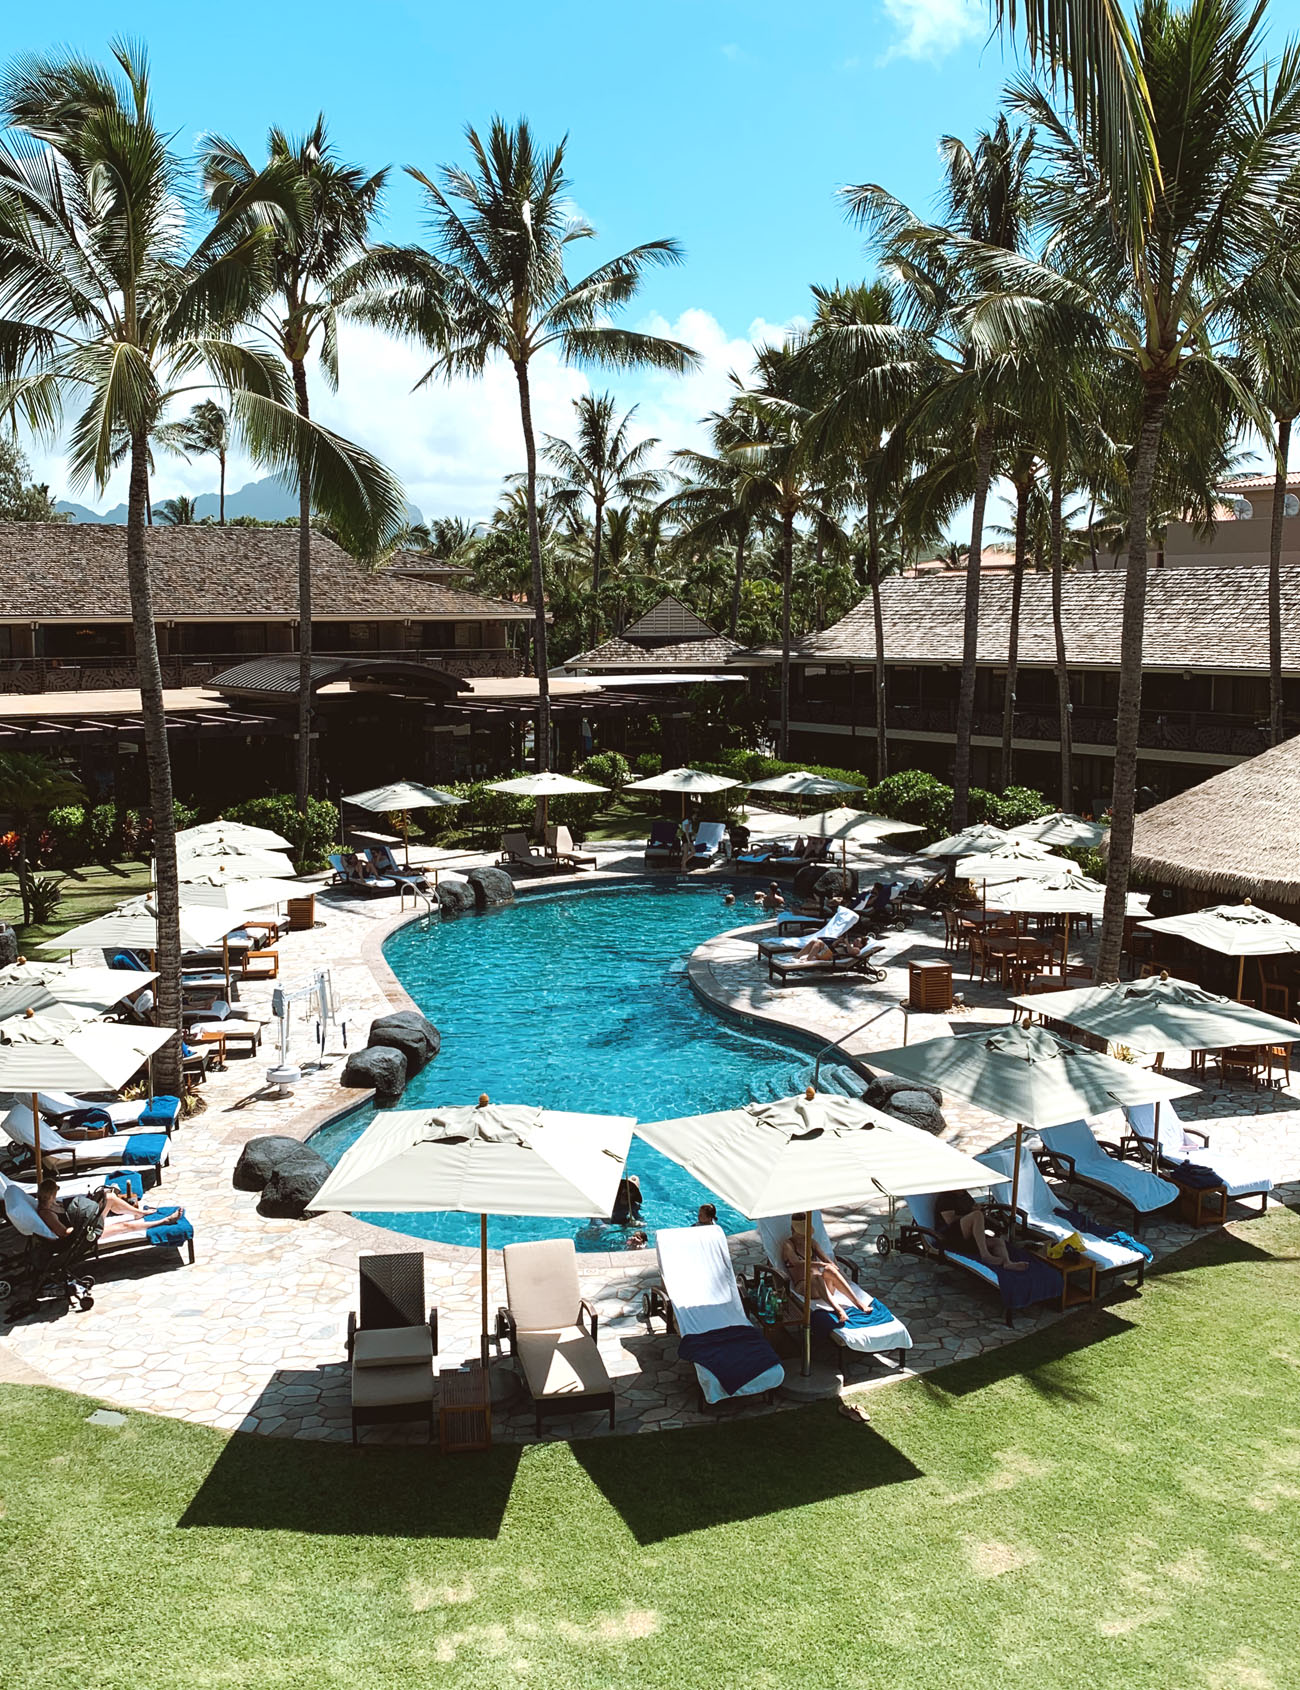 Ko’a Kea Hotel & Resort in Kauai